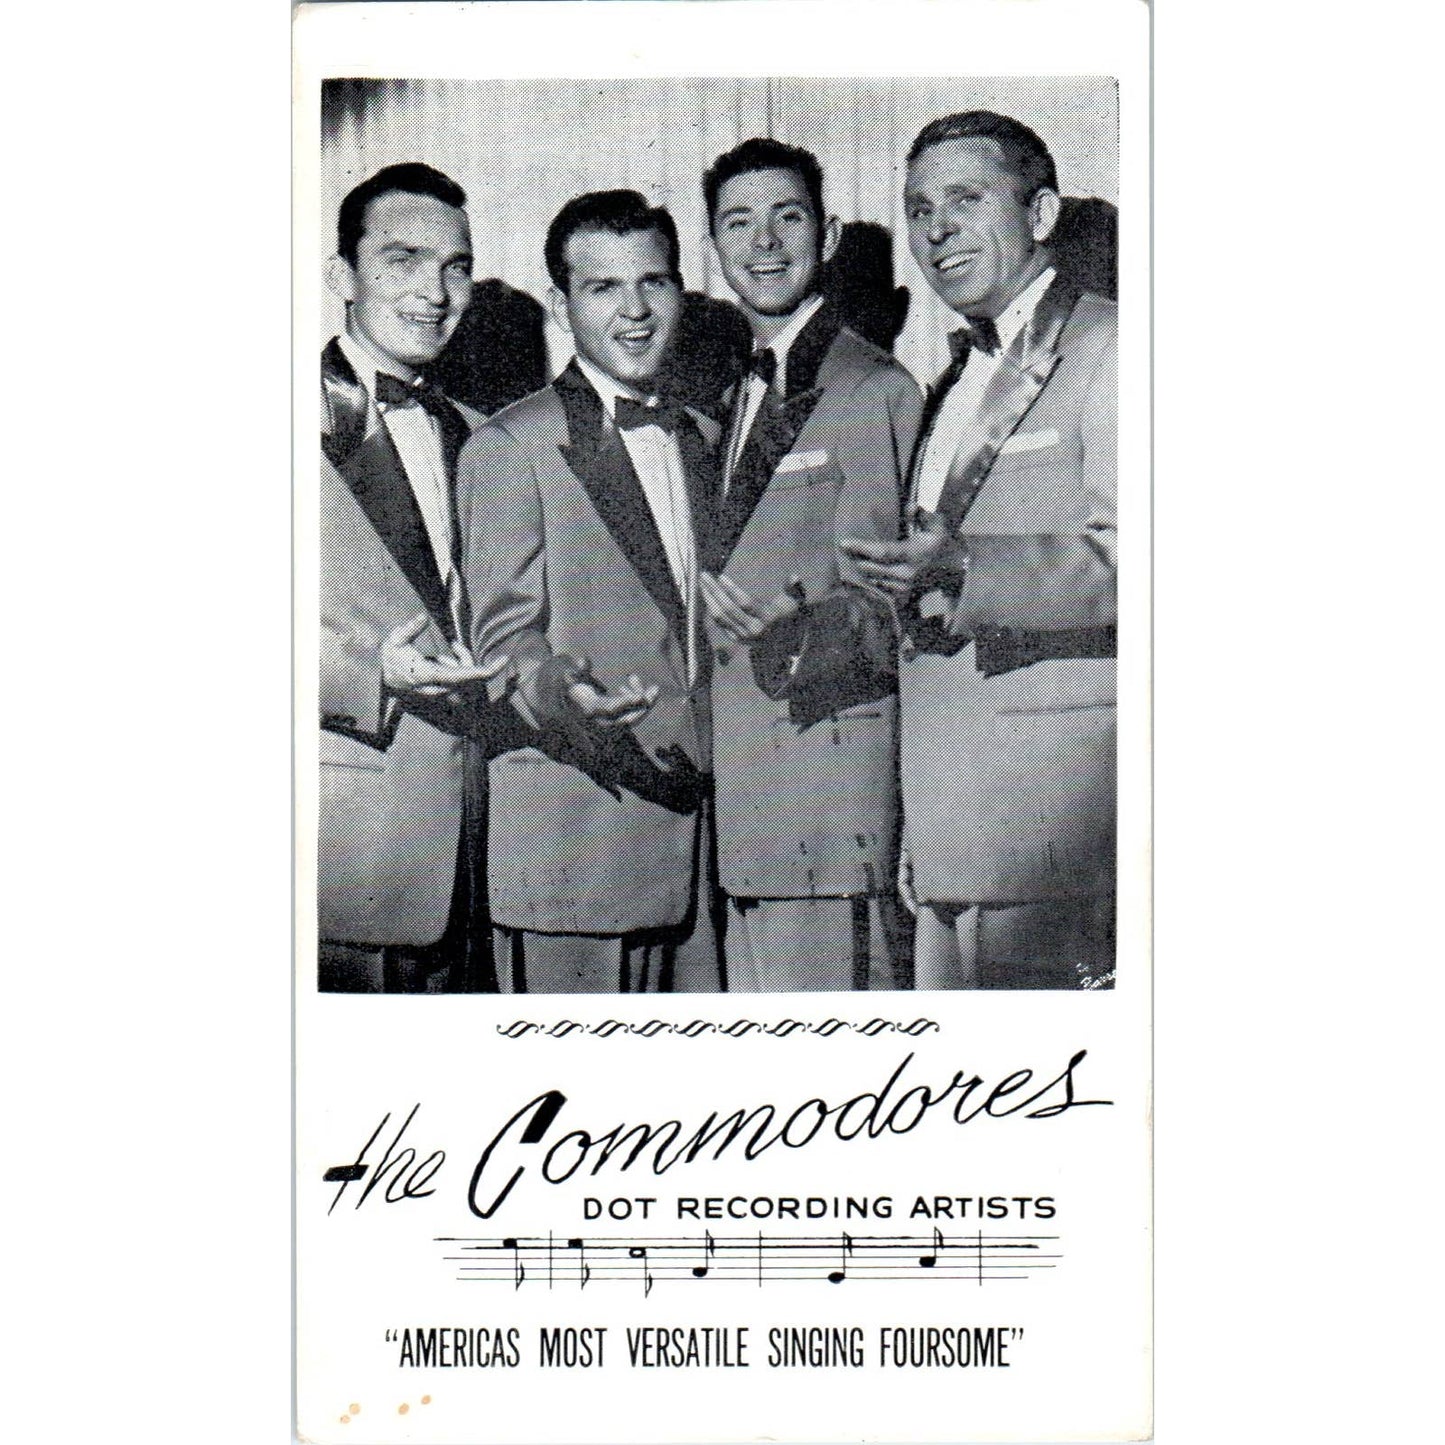 The Commodores Dot Recording Artists Original Trade Card TK1-24